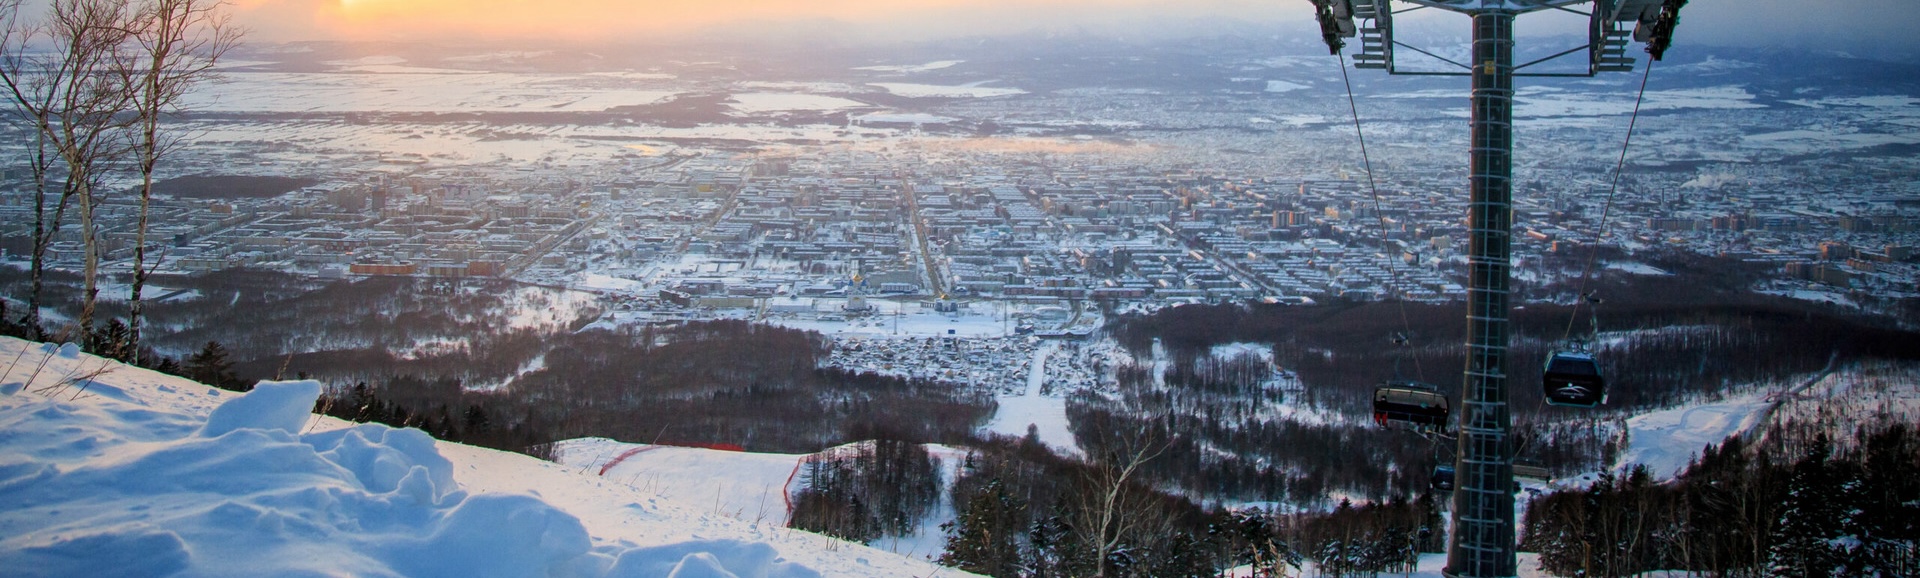 Южно-Сахалинск - горнолыжный спорт, керлинг на колясках